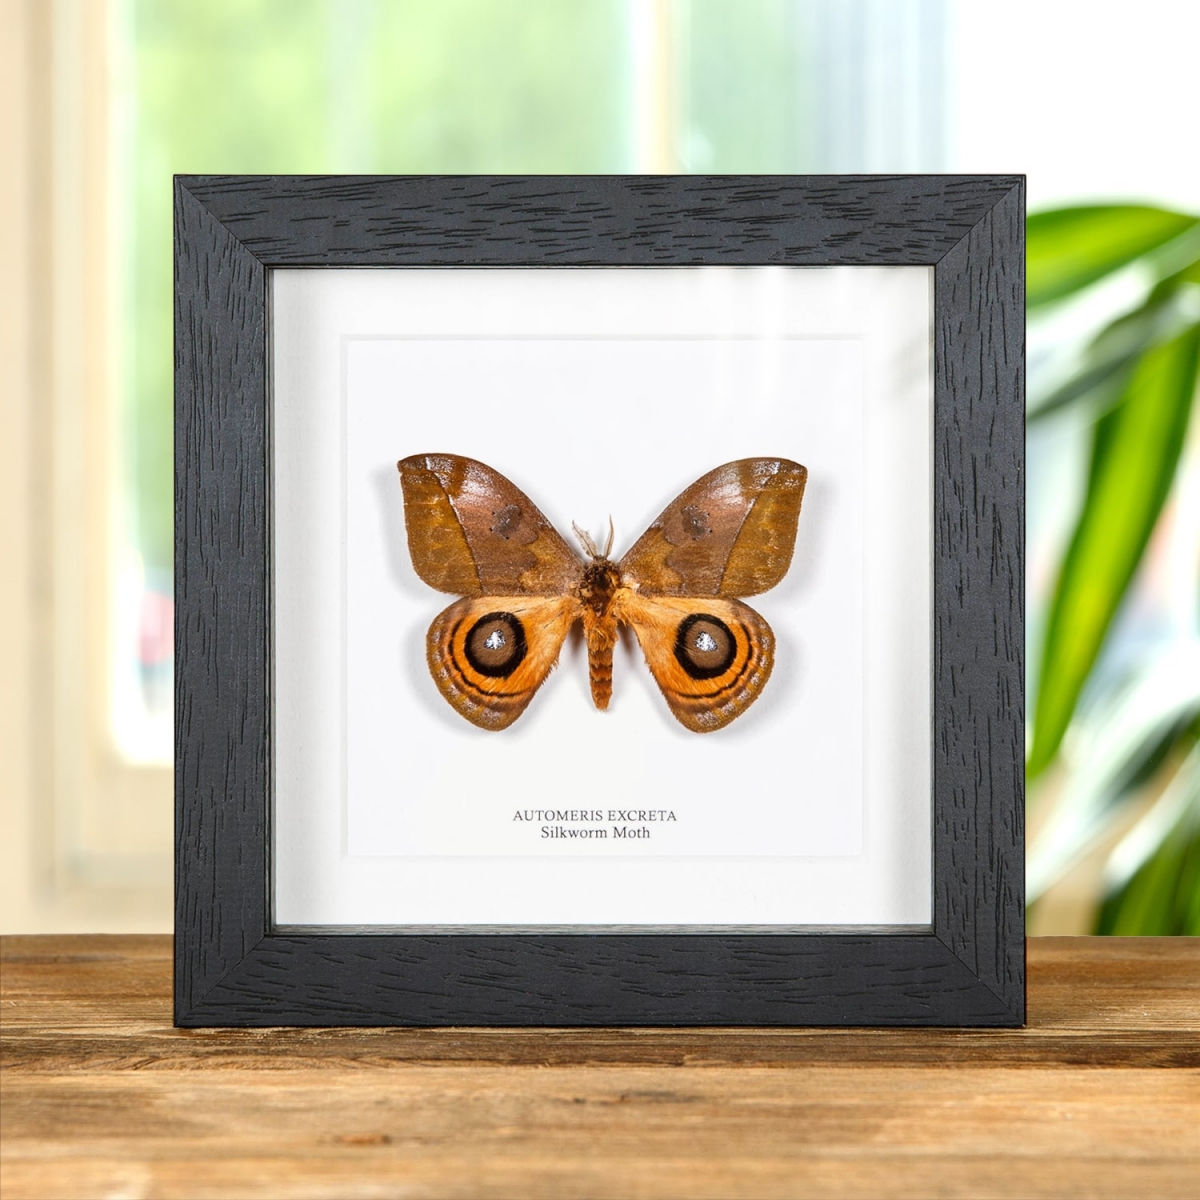 Minibeast Silkworm Moth In Box Frame (Automeris excreta)